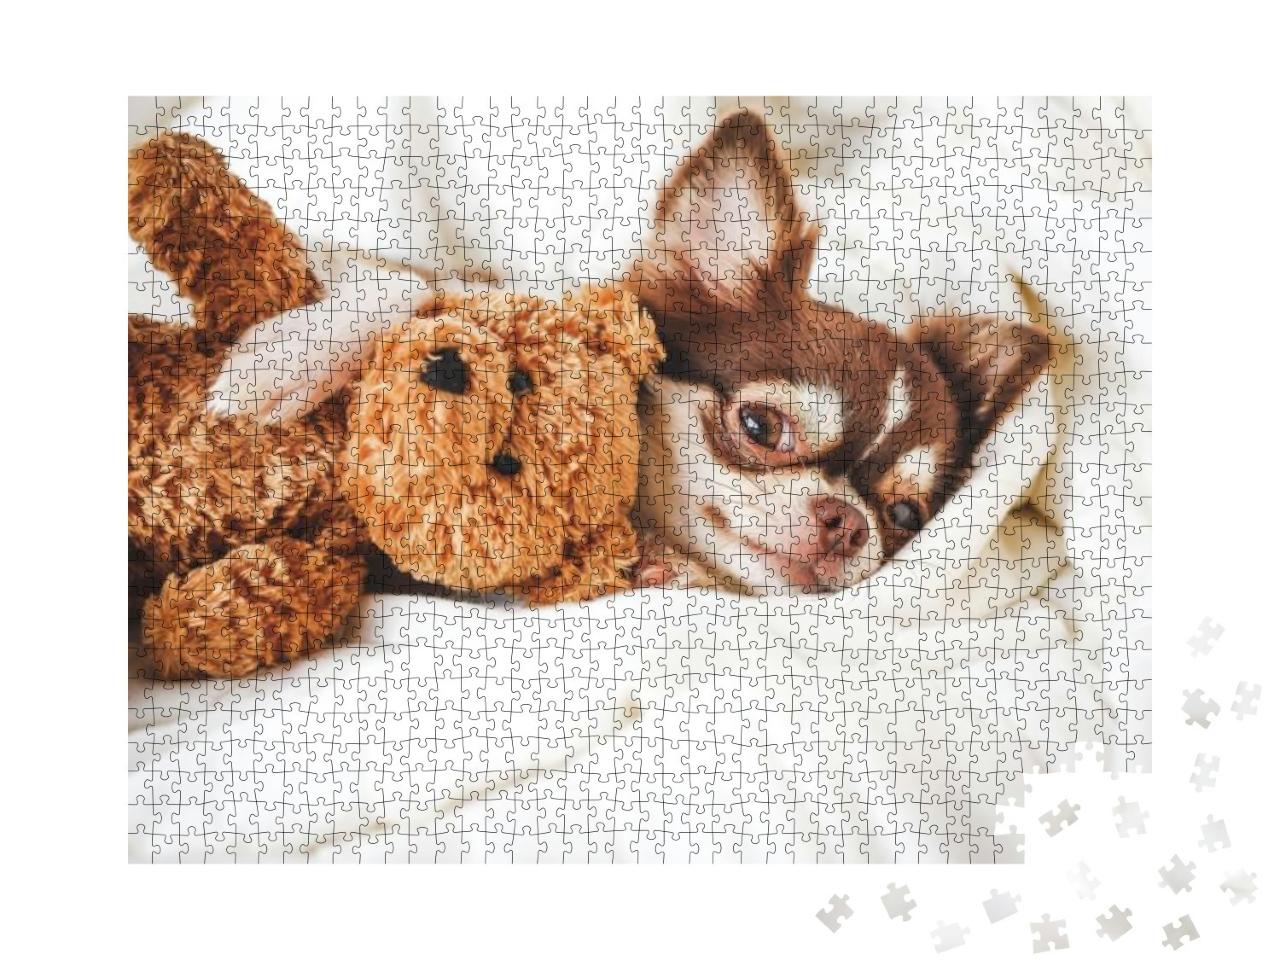 Puzzle 1000 Teile „Chihuahua-Welpe schlafend mit Teddybär“